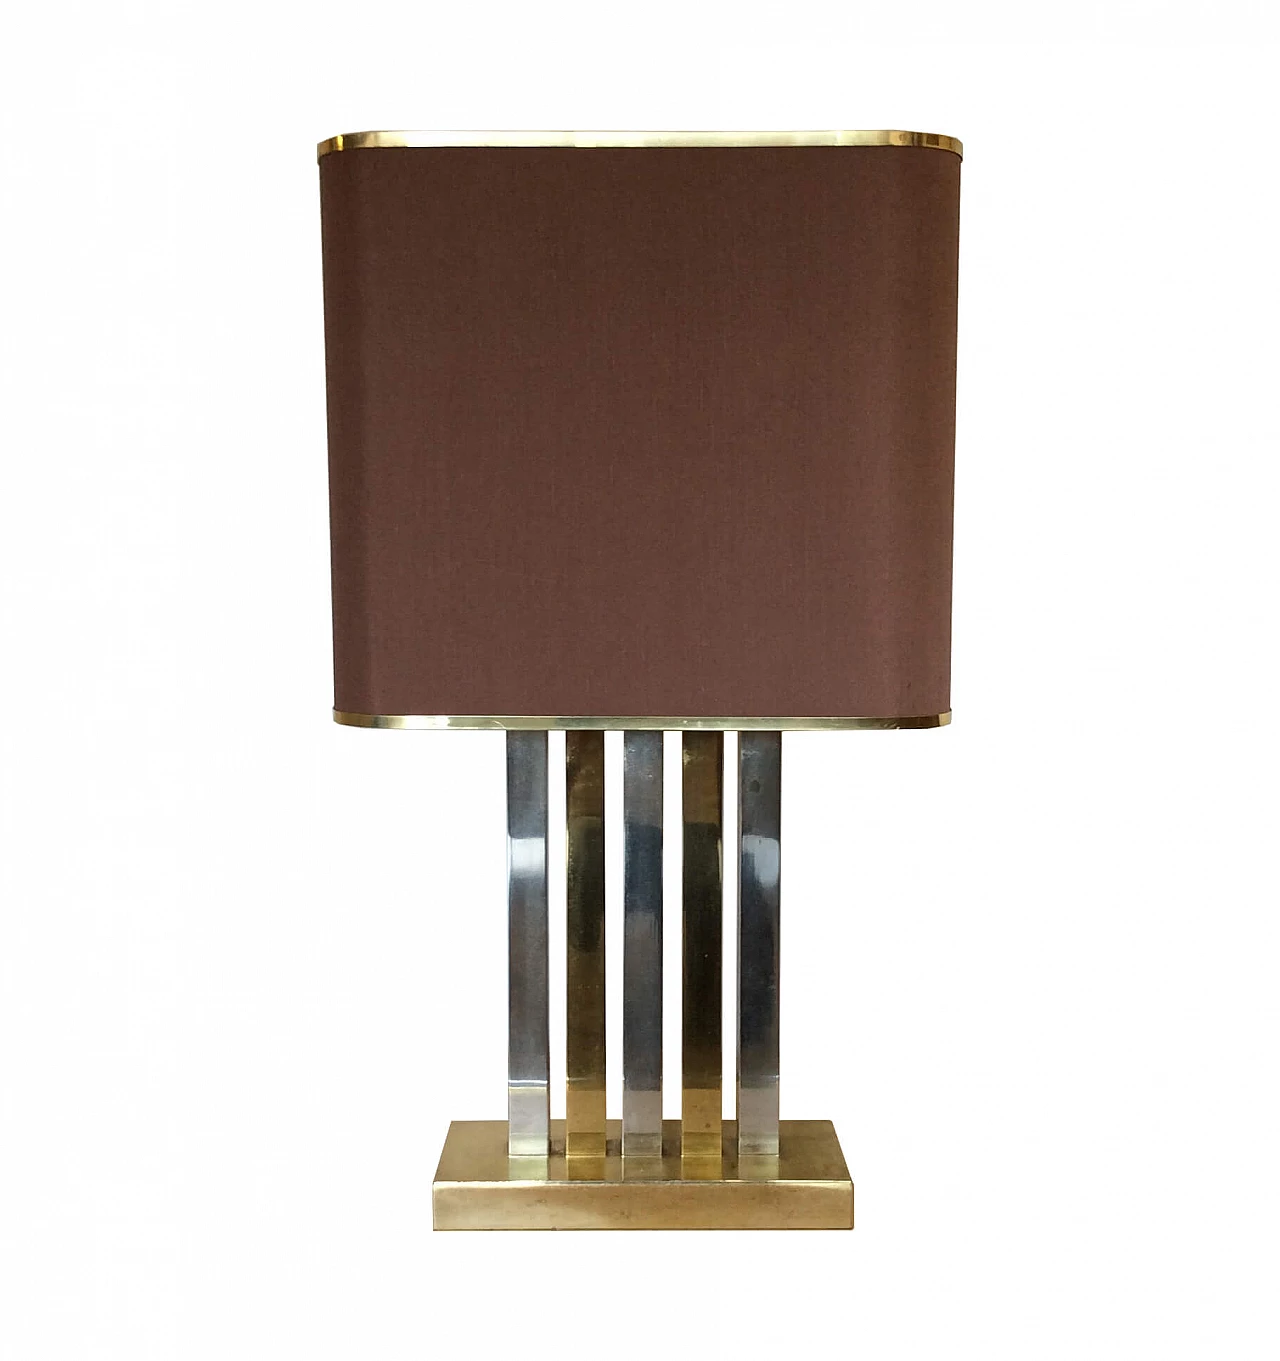 Romeo Rega table lamp, '70s 1067923